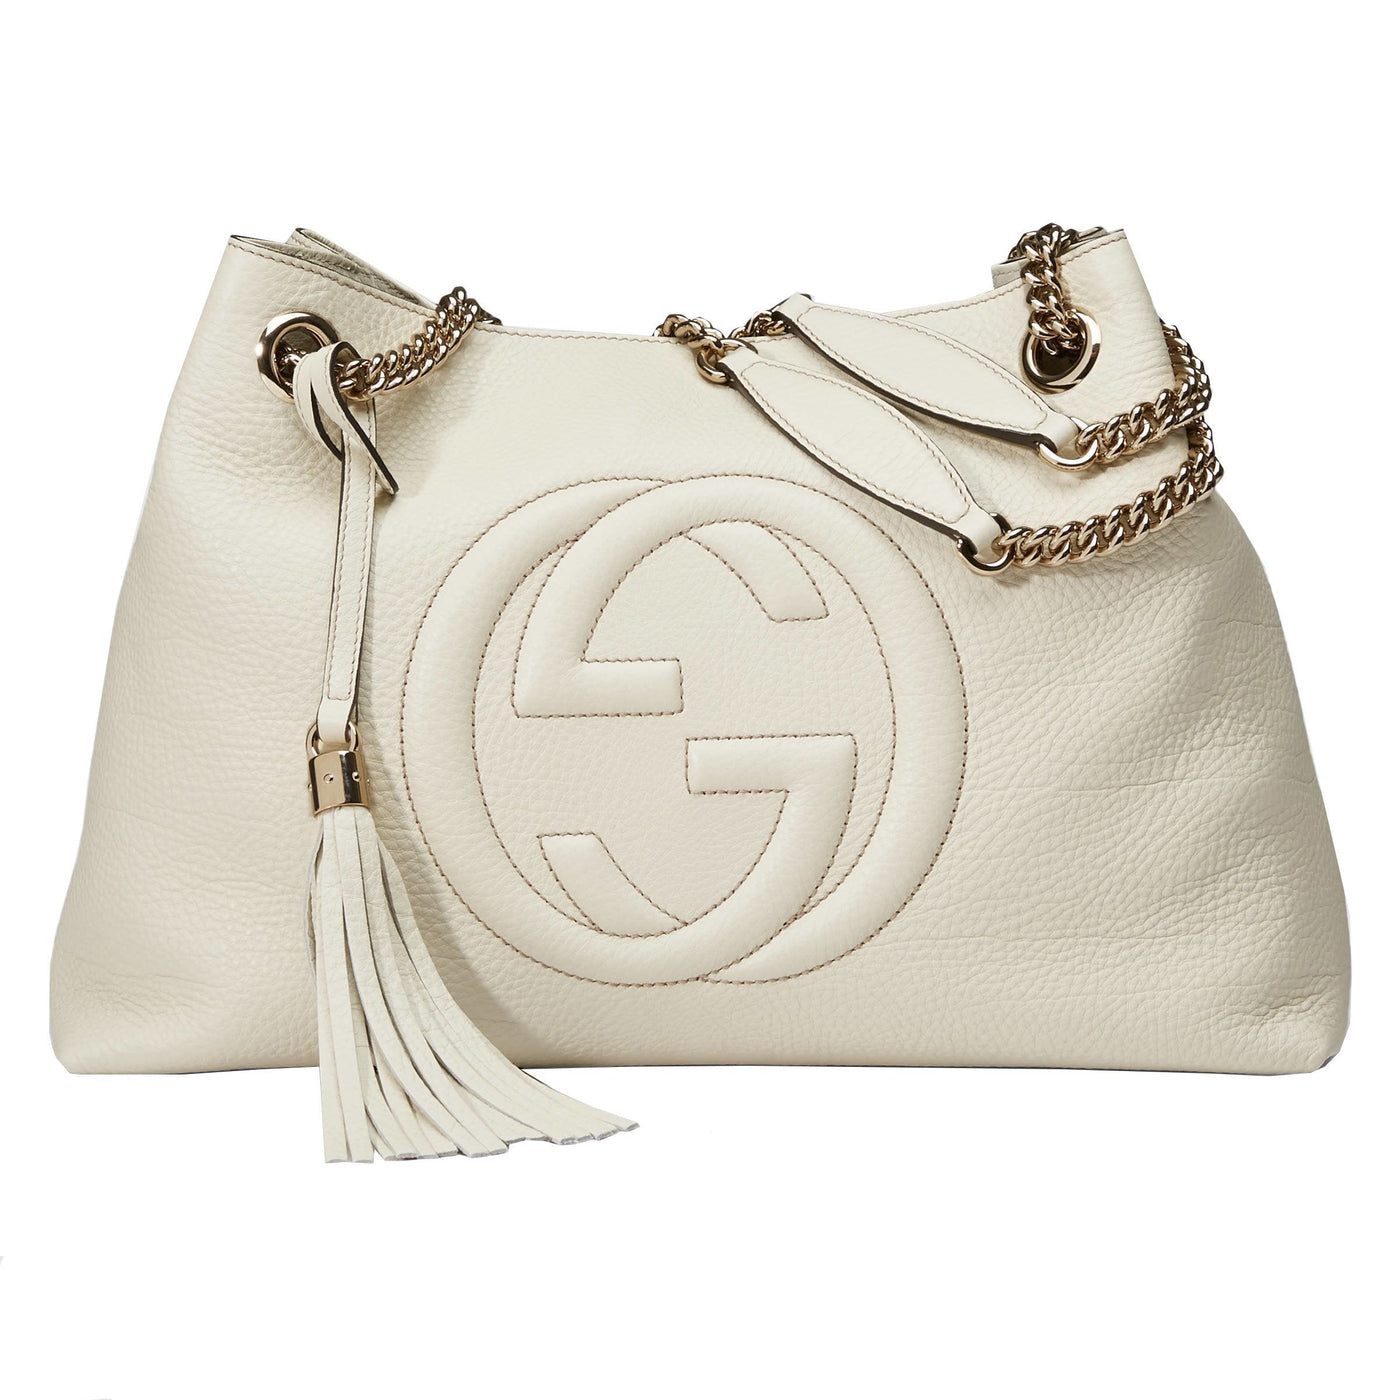 Gucci Soho GG Ivory Leather Chain Shoulder Tote Bag - LUXURYMRKT